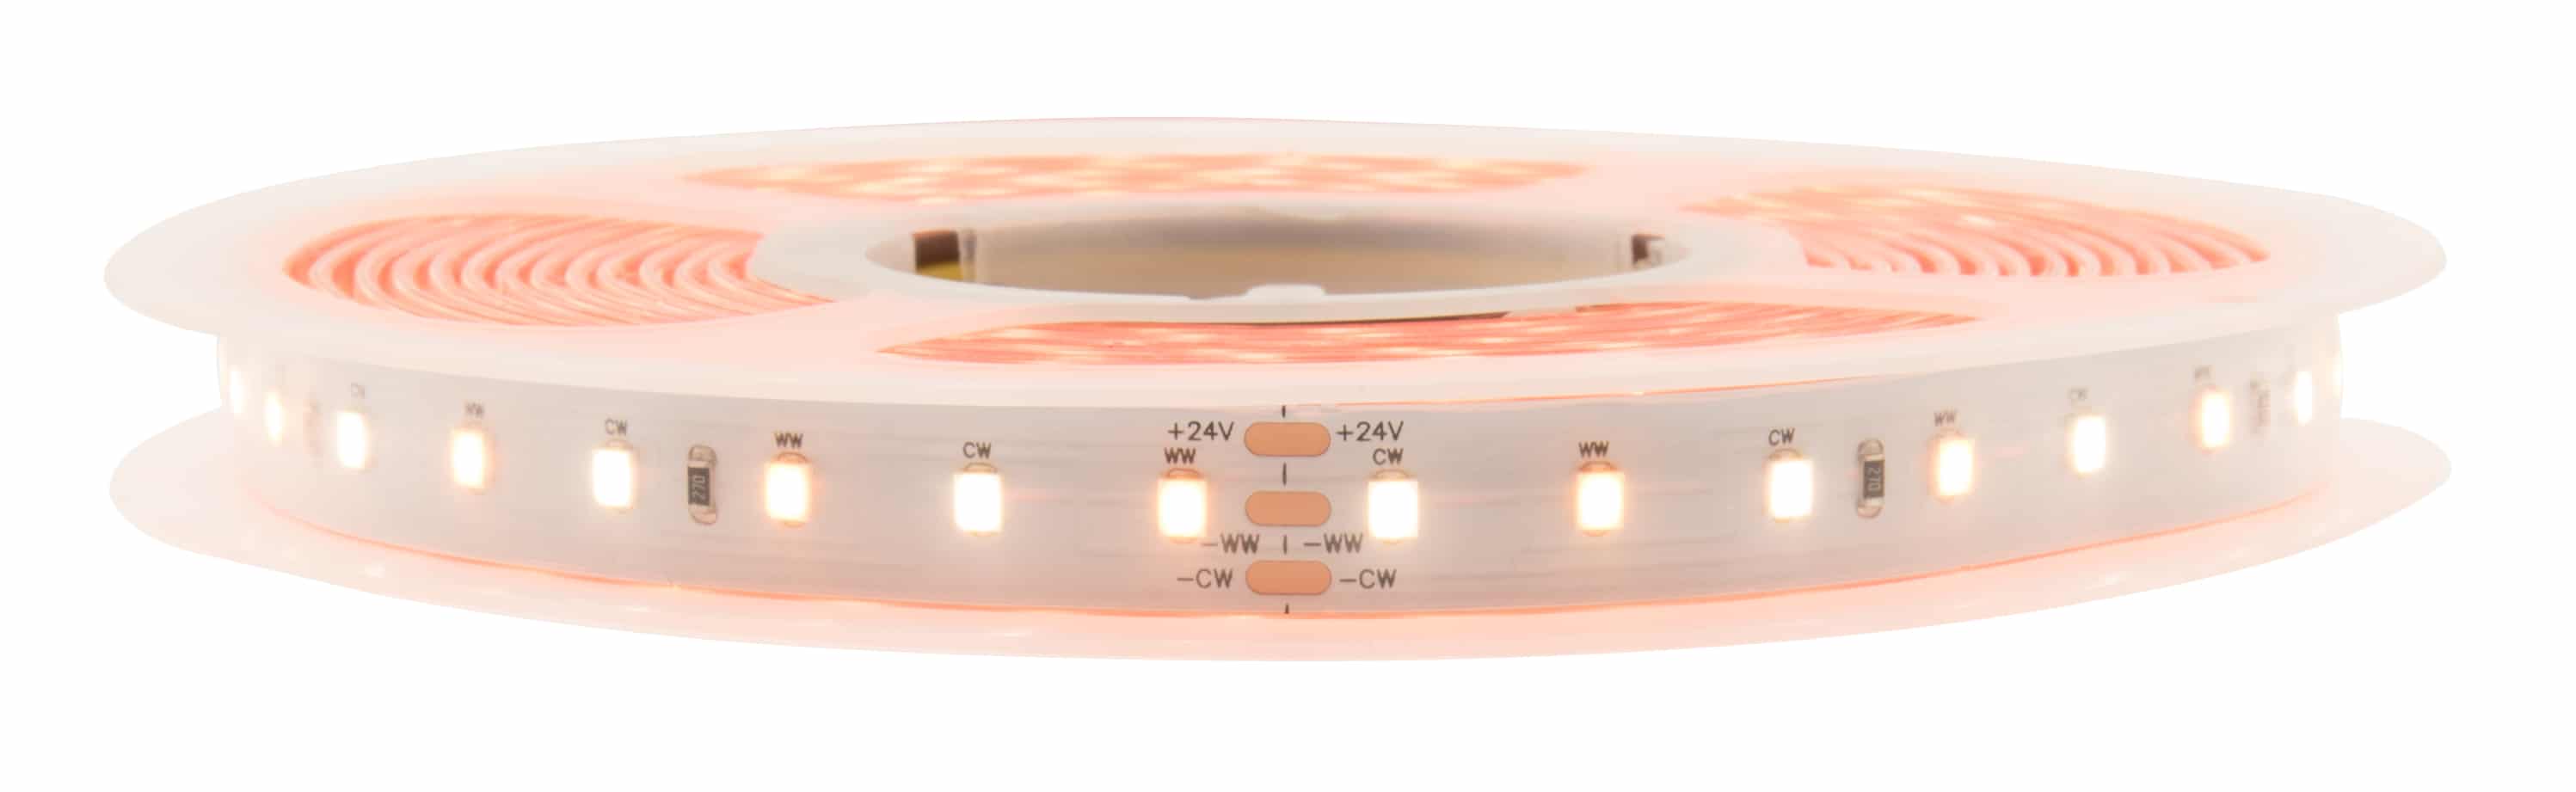 LED Flexstrip 86 AH (Ambiente Home) - IP44 - Indoor | CRI/RA 90+